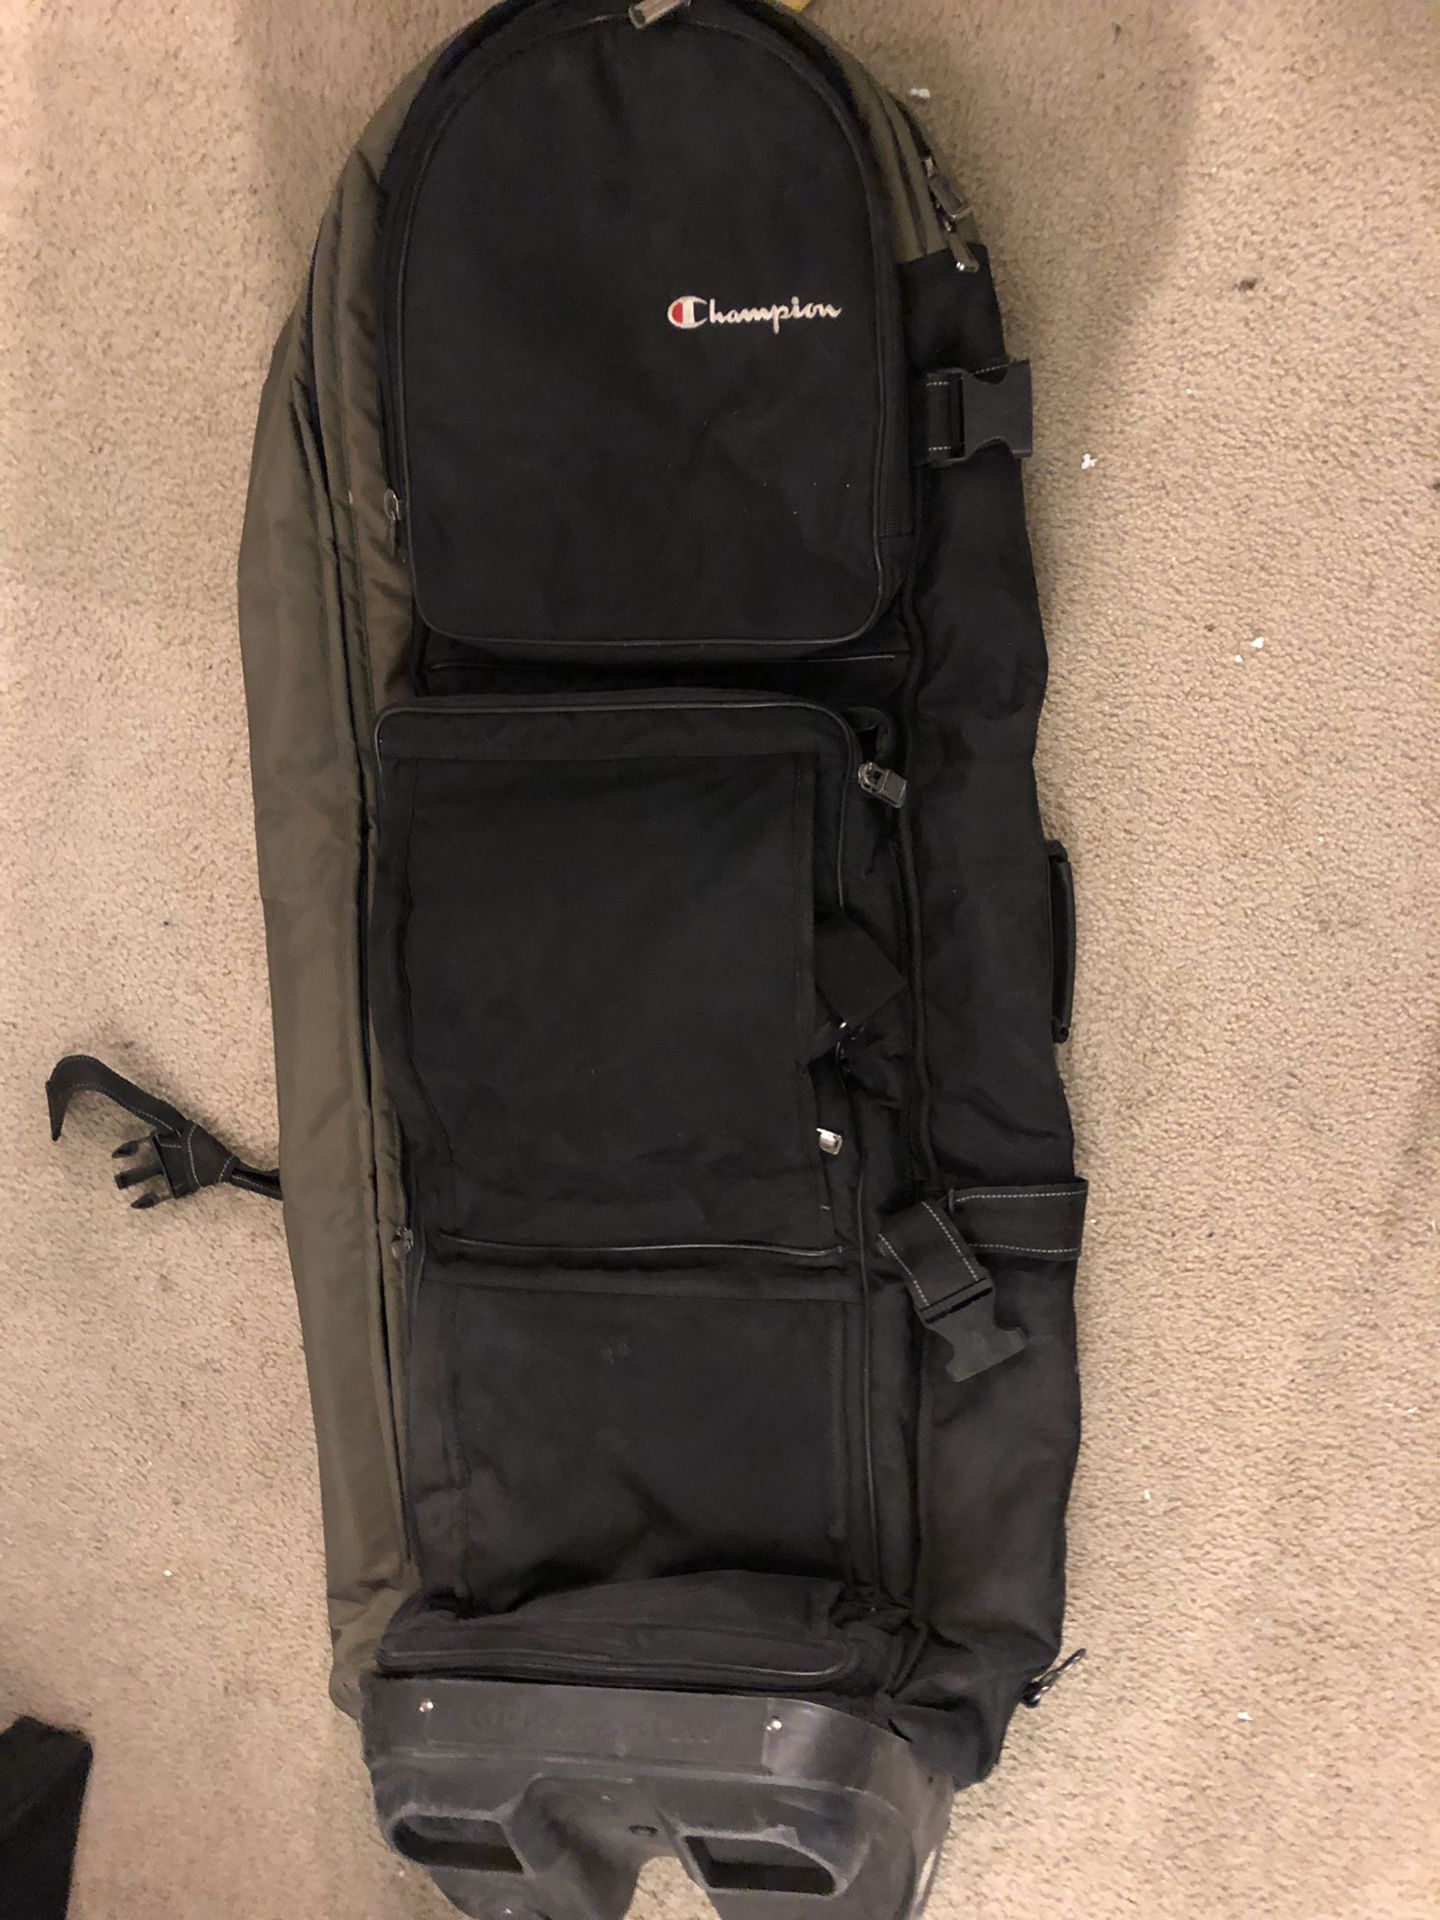 Travel Golf bag